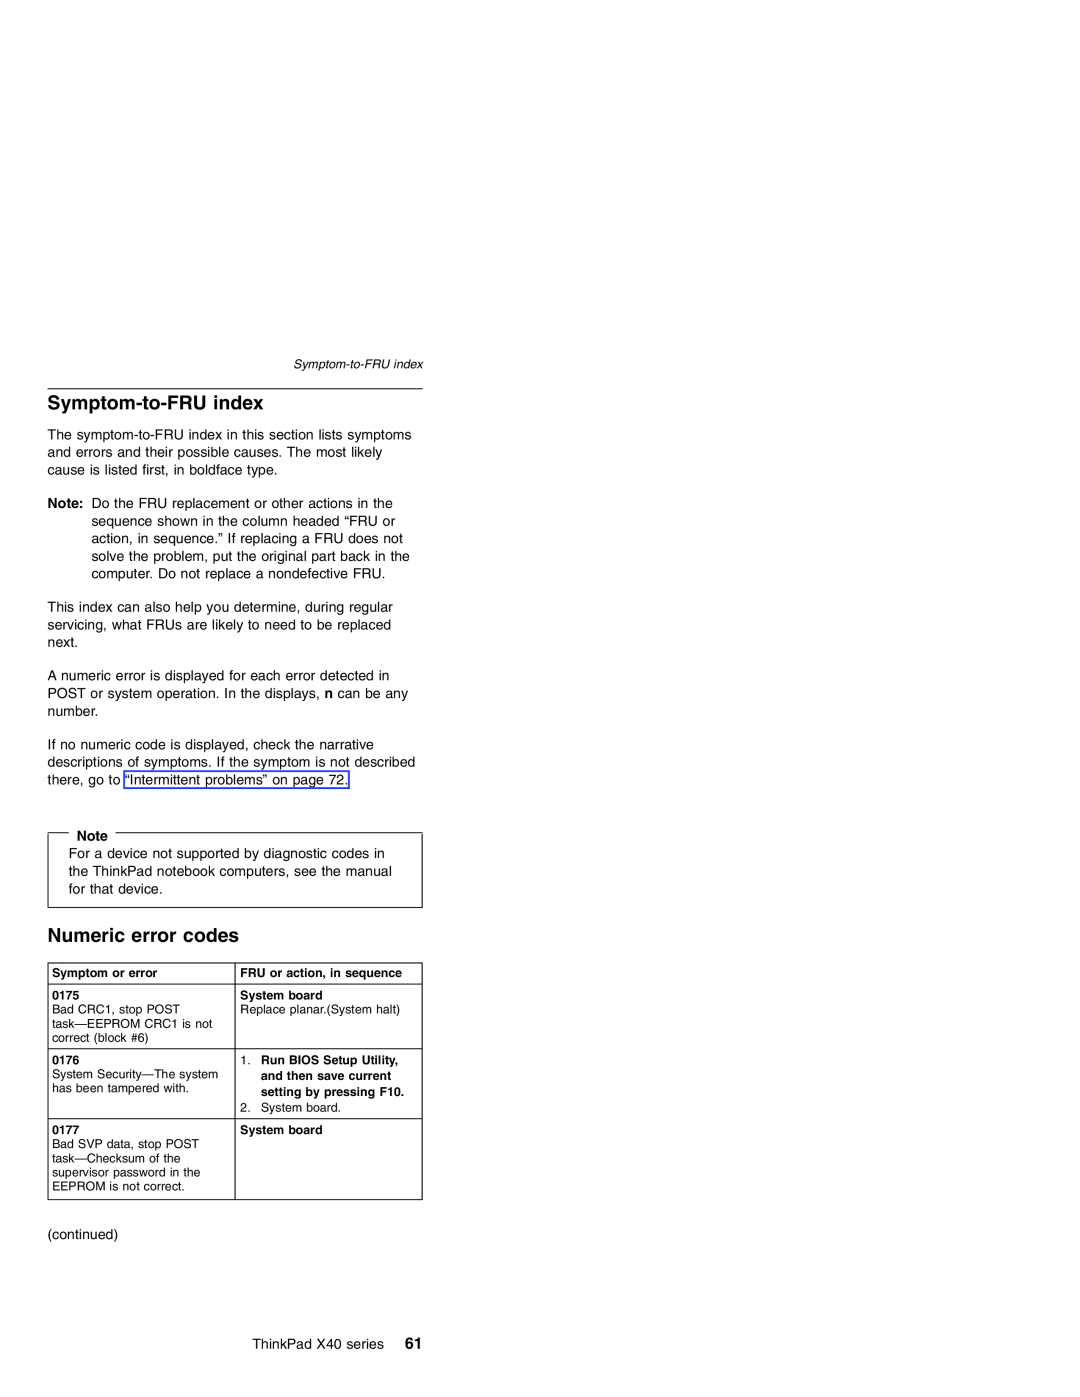 Lenovo MT 2369 manual Symptom-to-FRU index, Numeric error codes 